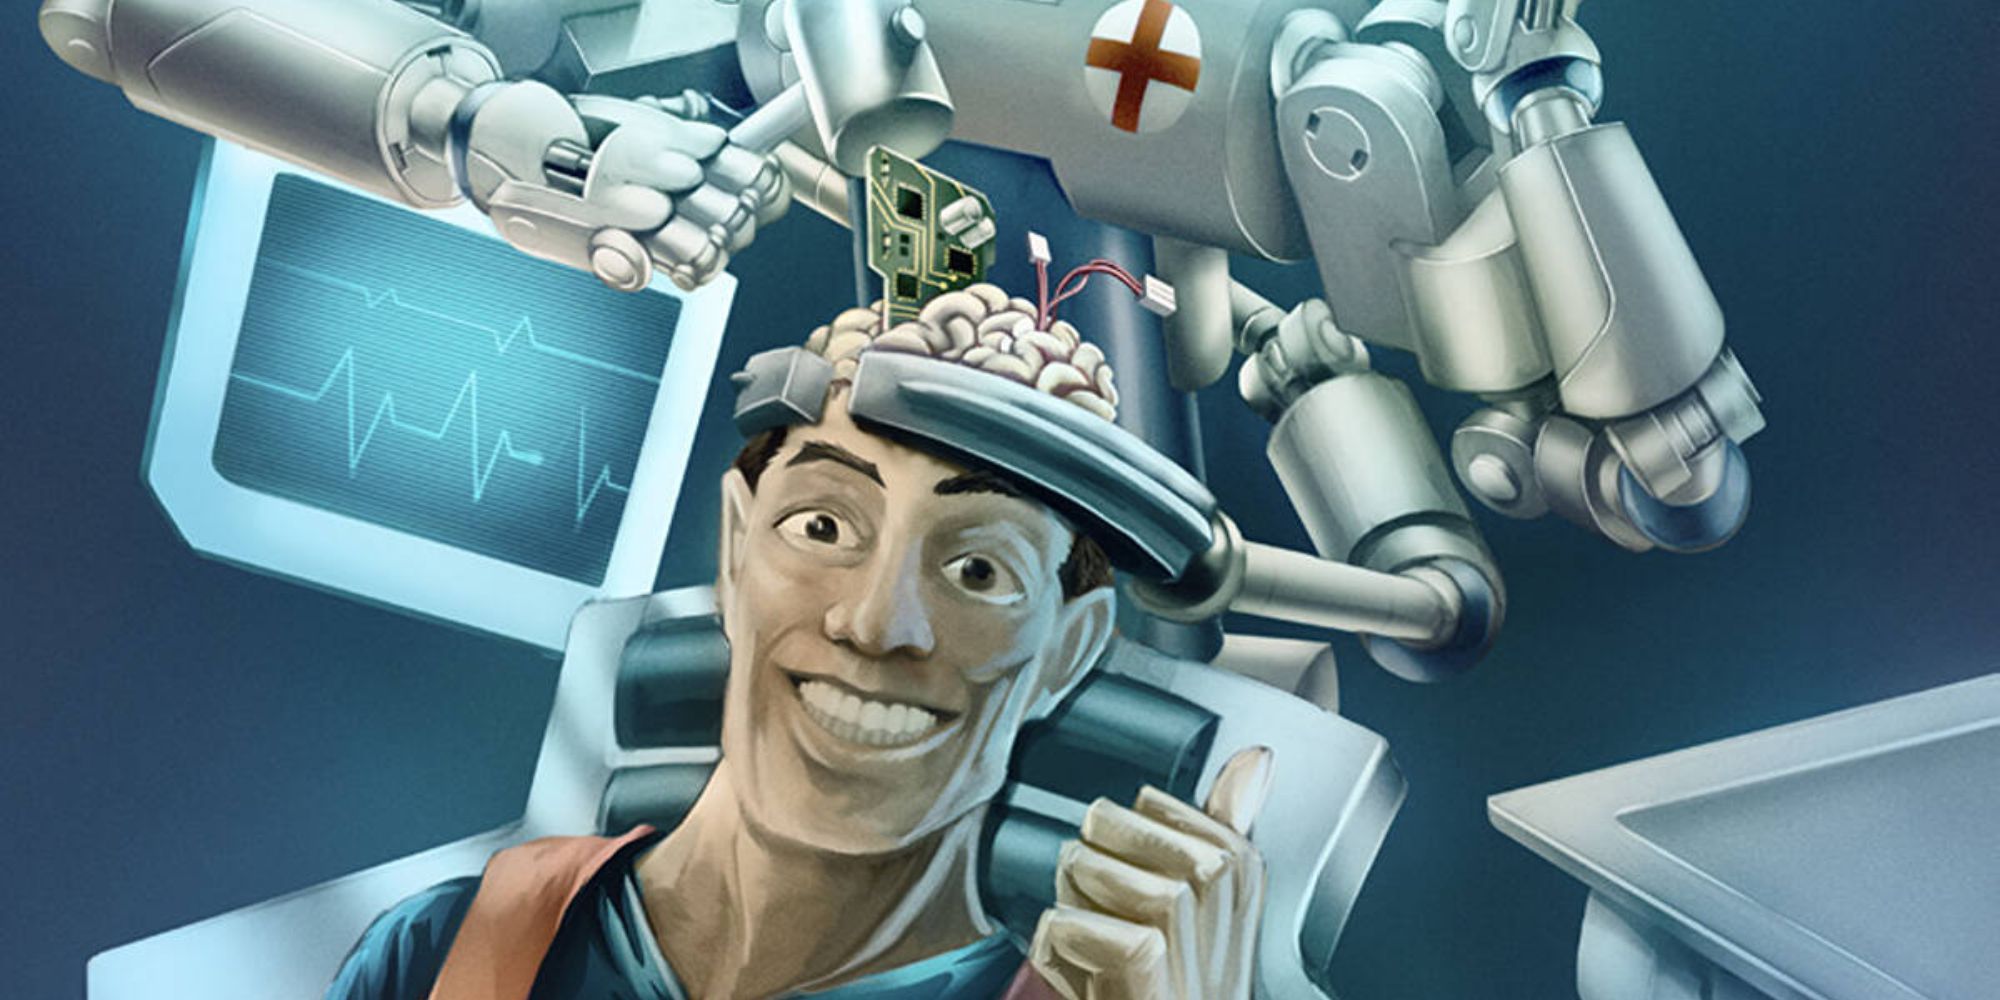 Paranoia artist smiles as robot performs brain surgery on him